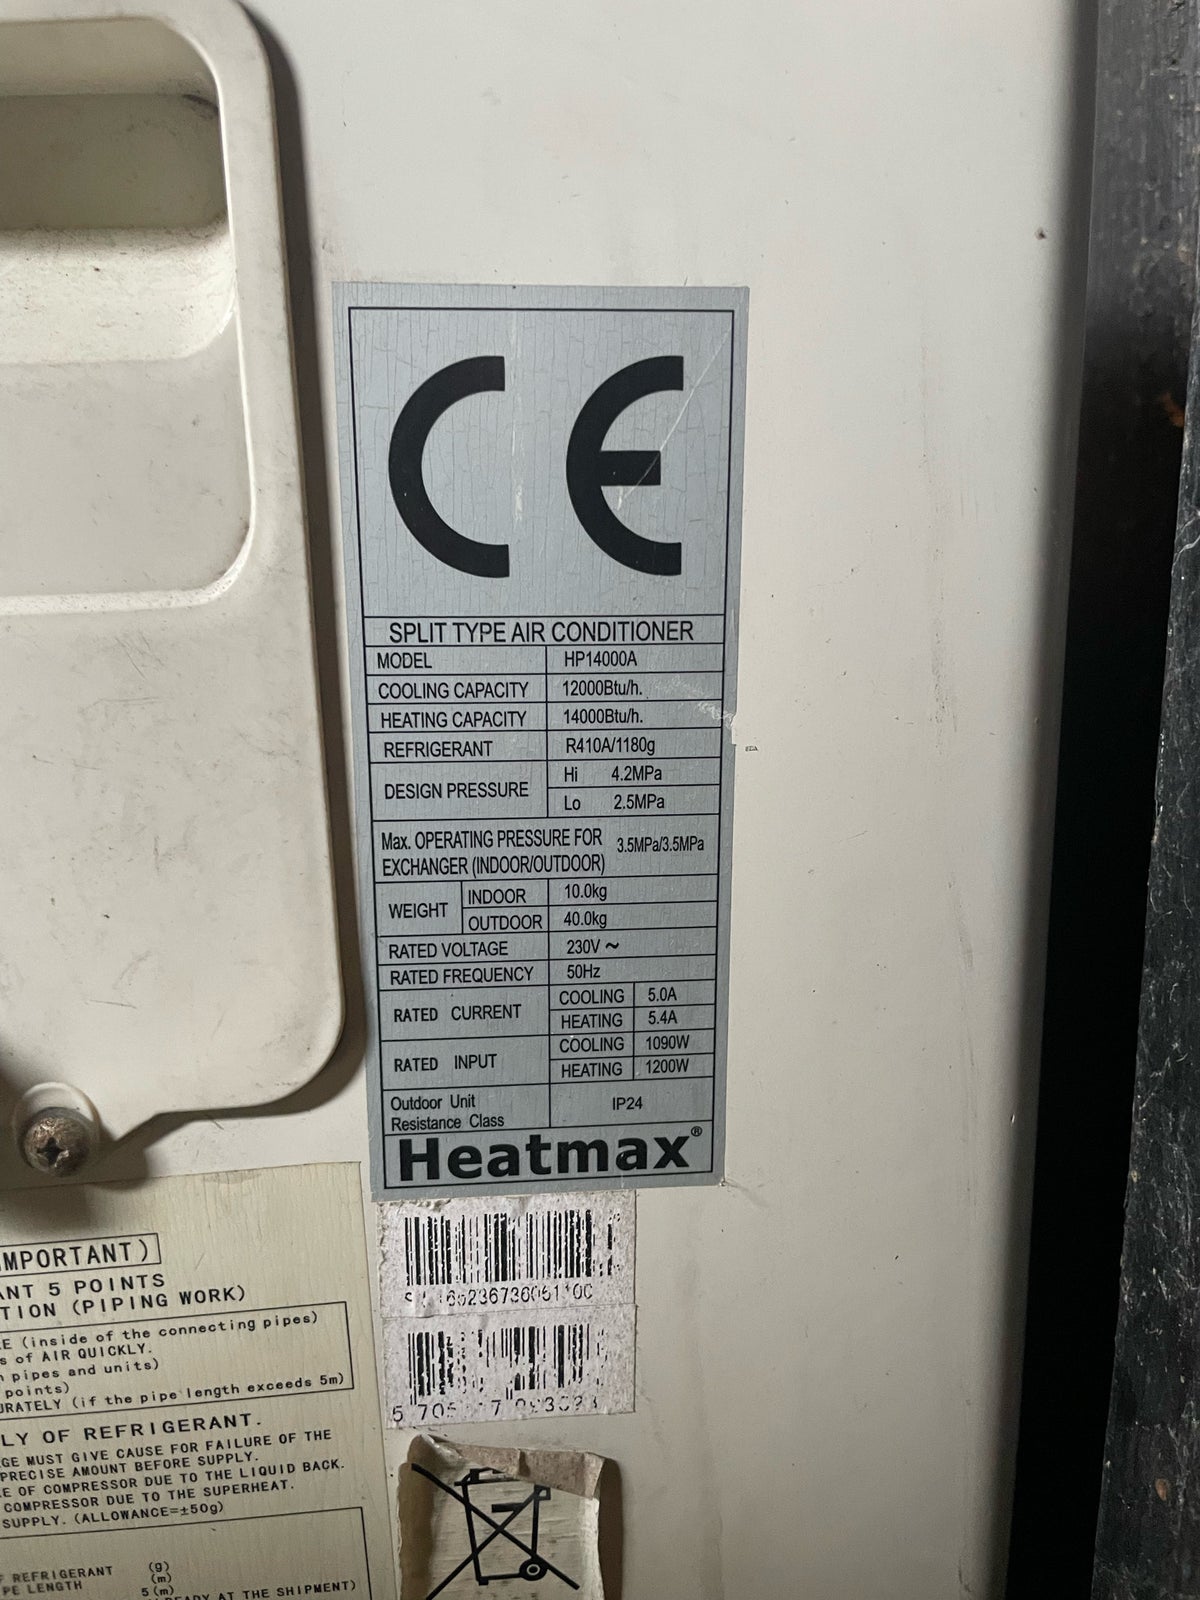 Aircondition, Heatmax